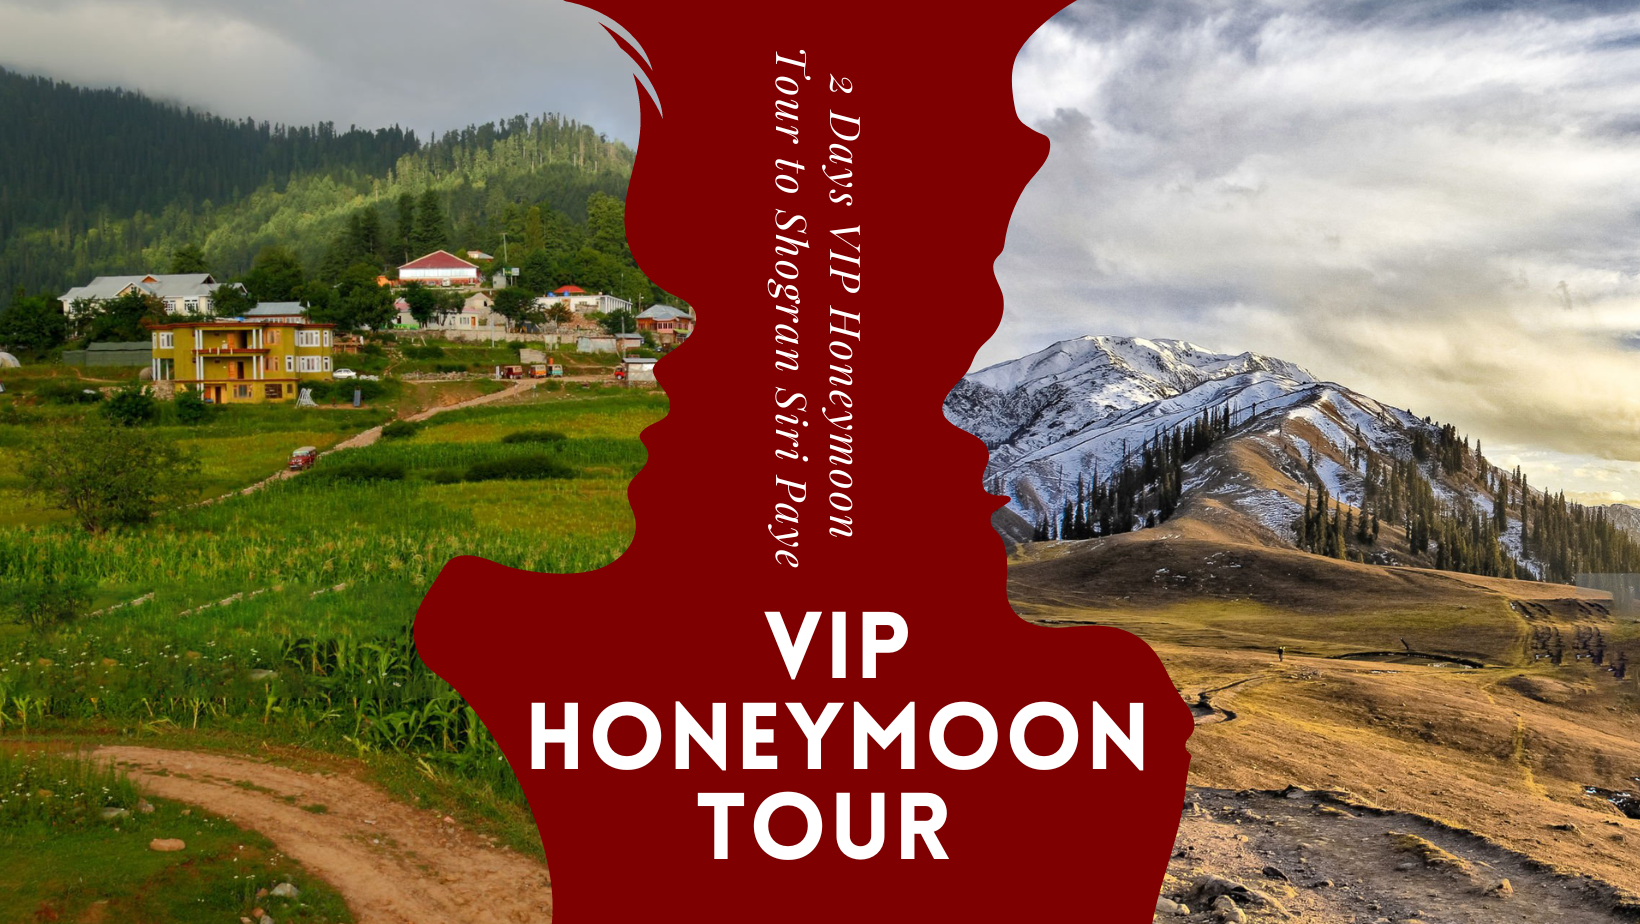 Honeymoon tour